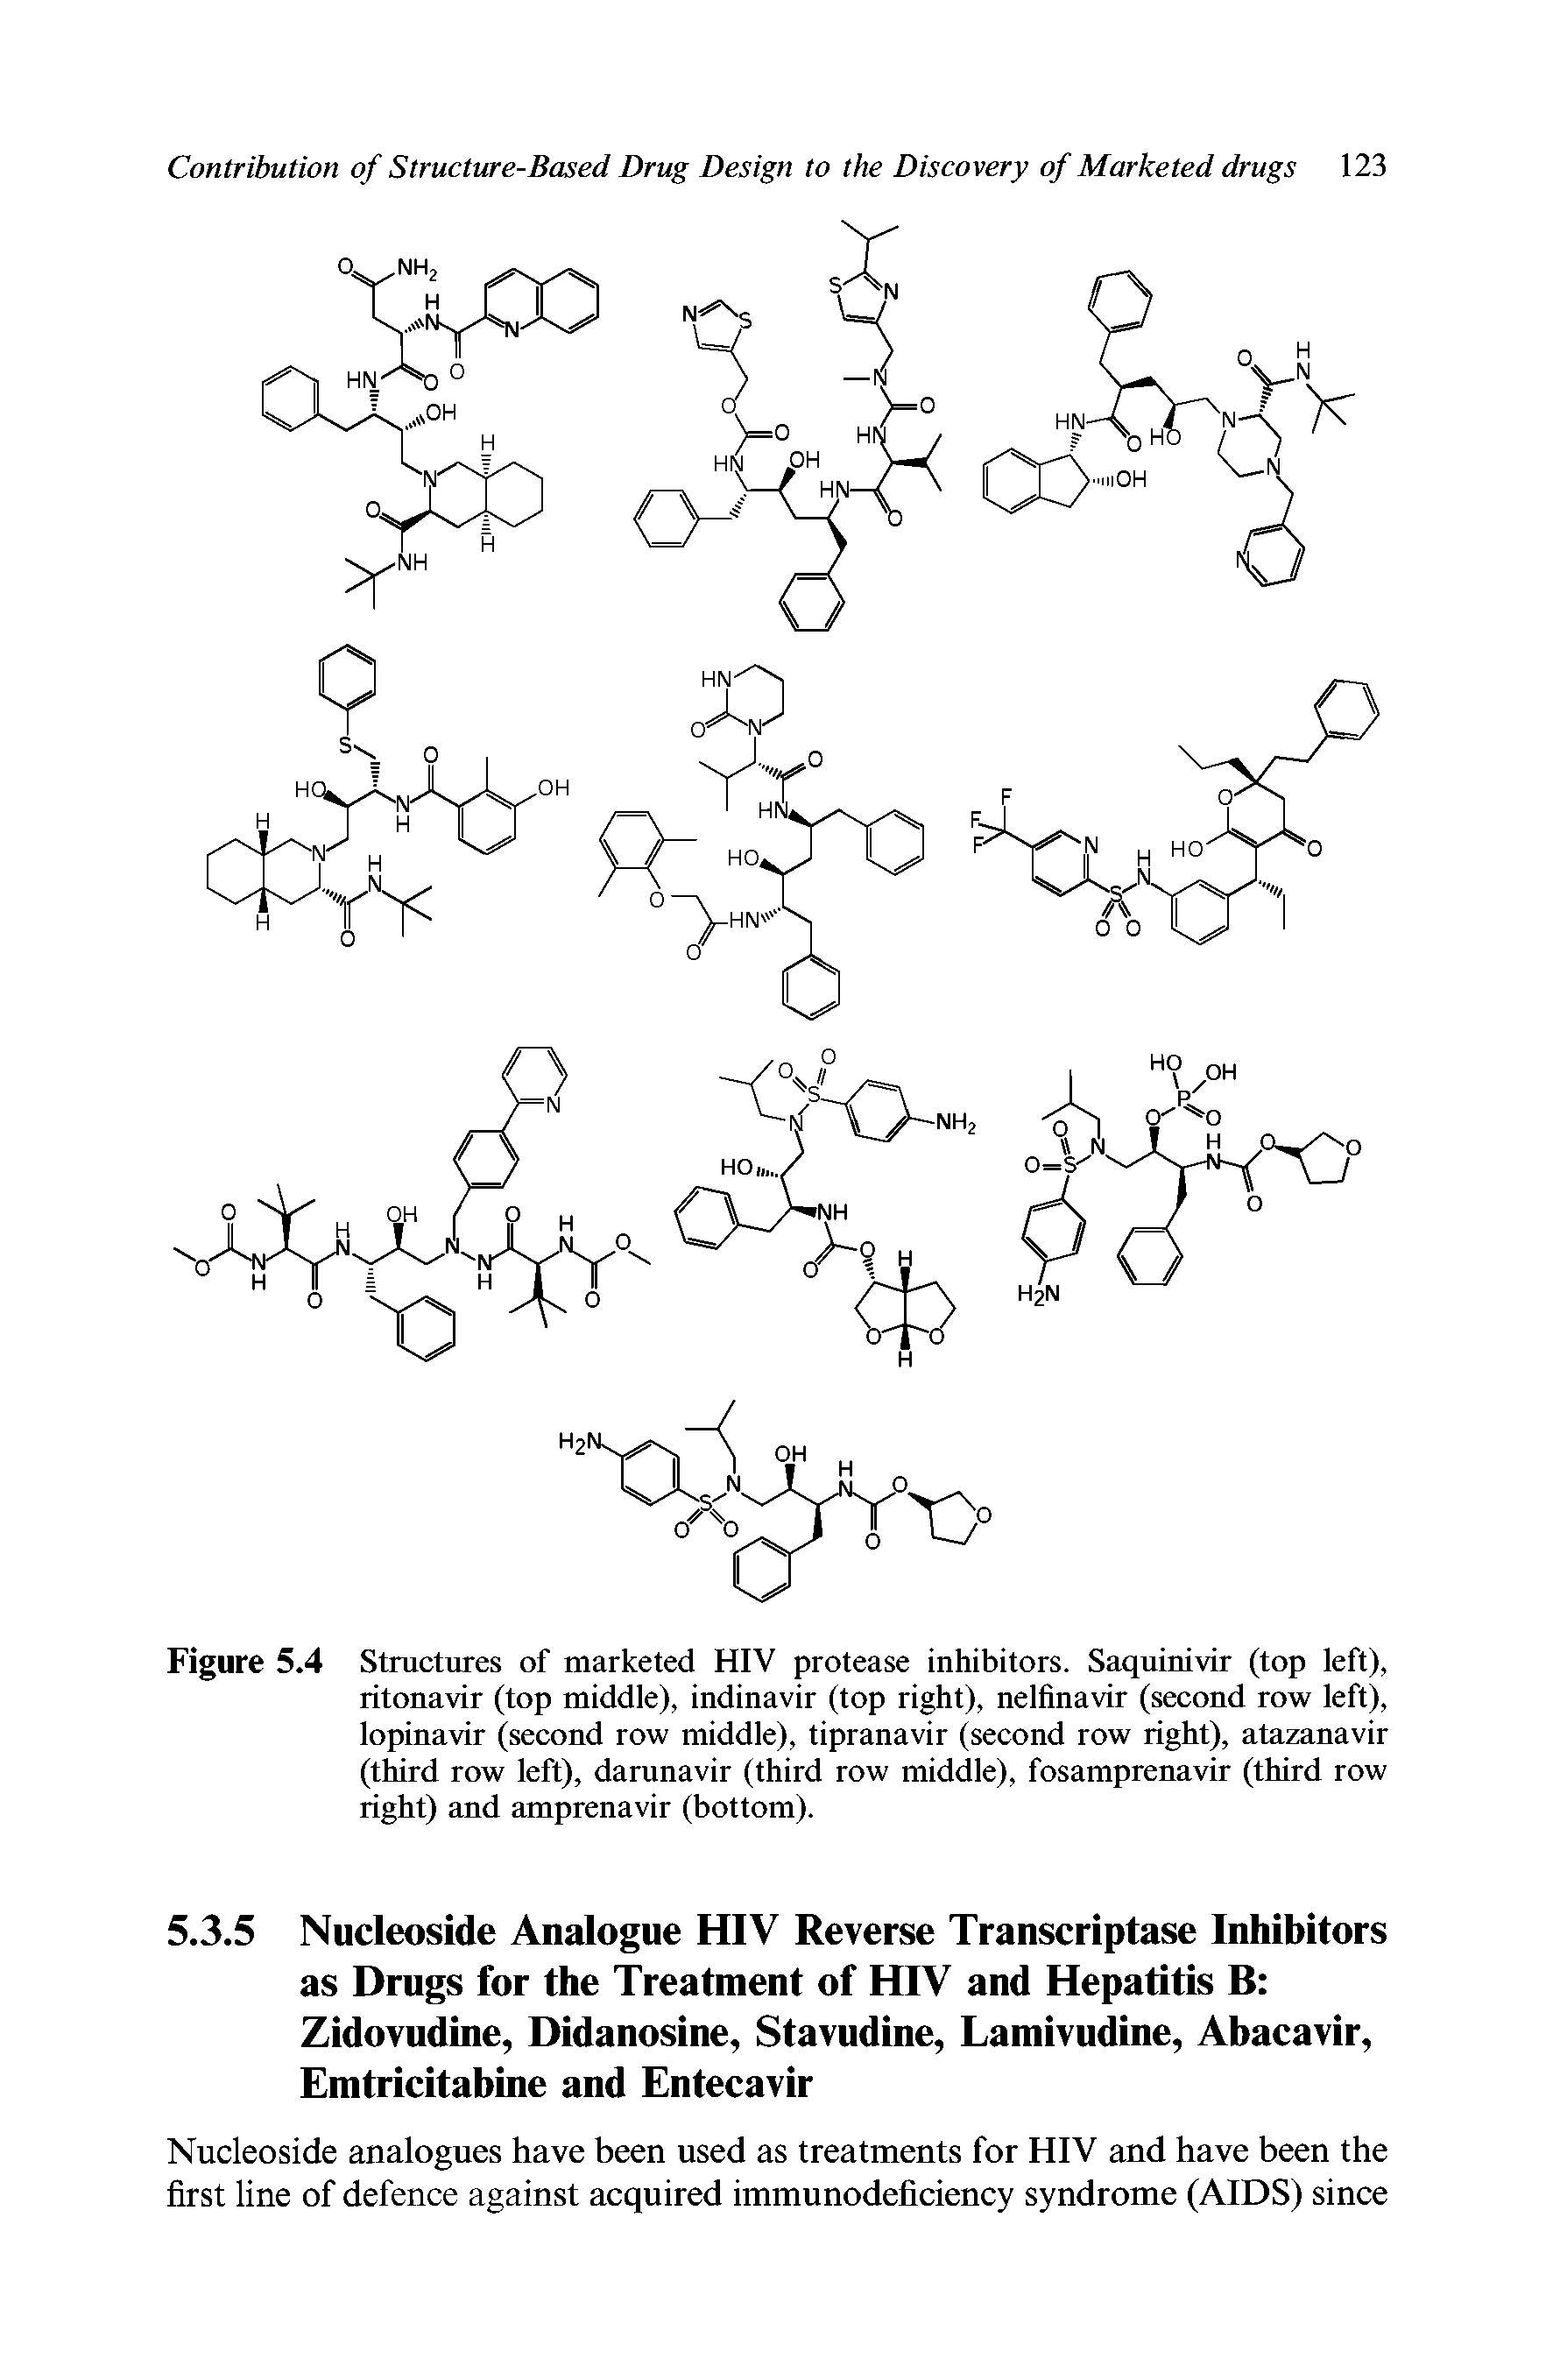 Figure 5.4 Structures of marketed HIV protease inhibitors. Saquinivir (top left), ritonavir (top middle), indinavir (top right), nelfinavir (second row left), lopinavir (second row middle), tipranavir (second row right), atazanavir (third row left), darunavir (third row middle), fosamprenavir (third row right) and amprenavir (bottom).